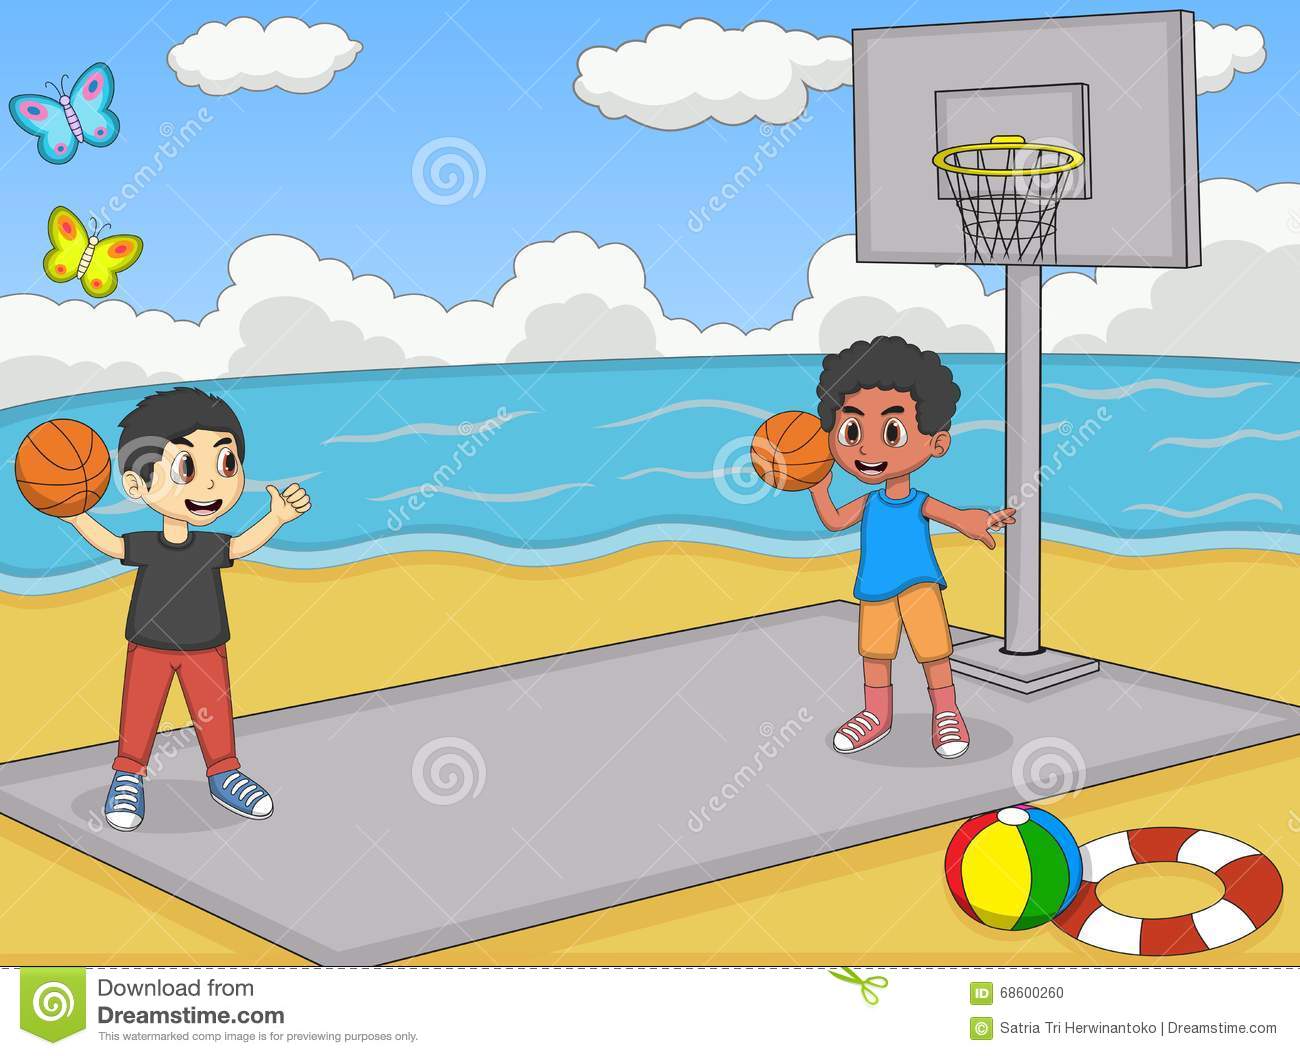 A Boy Playing Basketball At The Beach Cartoon Stock Vector.